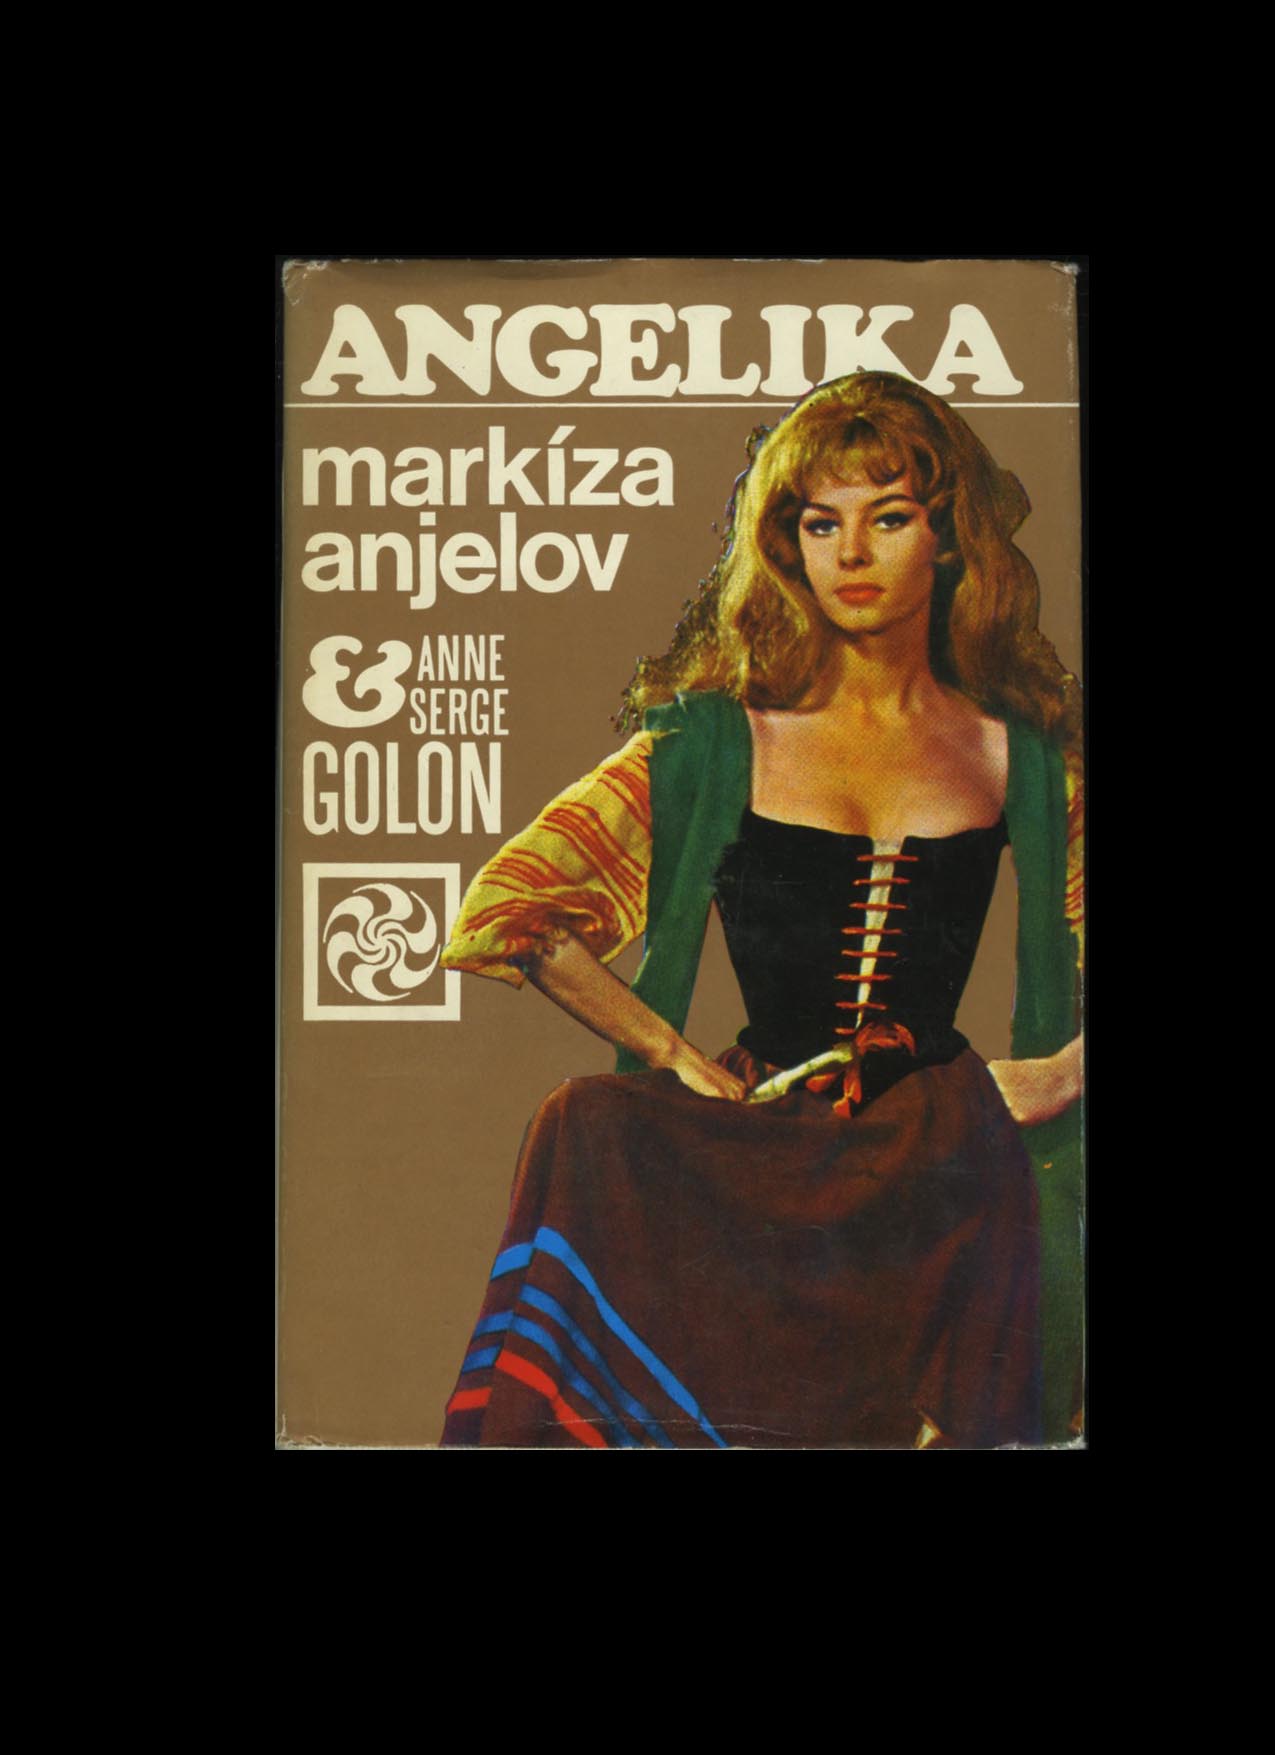 Angelika, markíza anjelov (Anne Golon, Serge Golon)